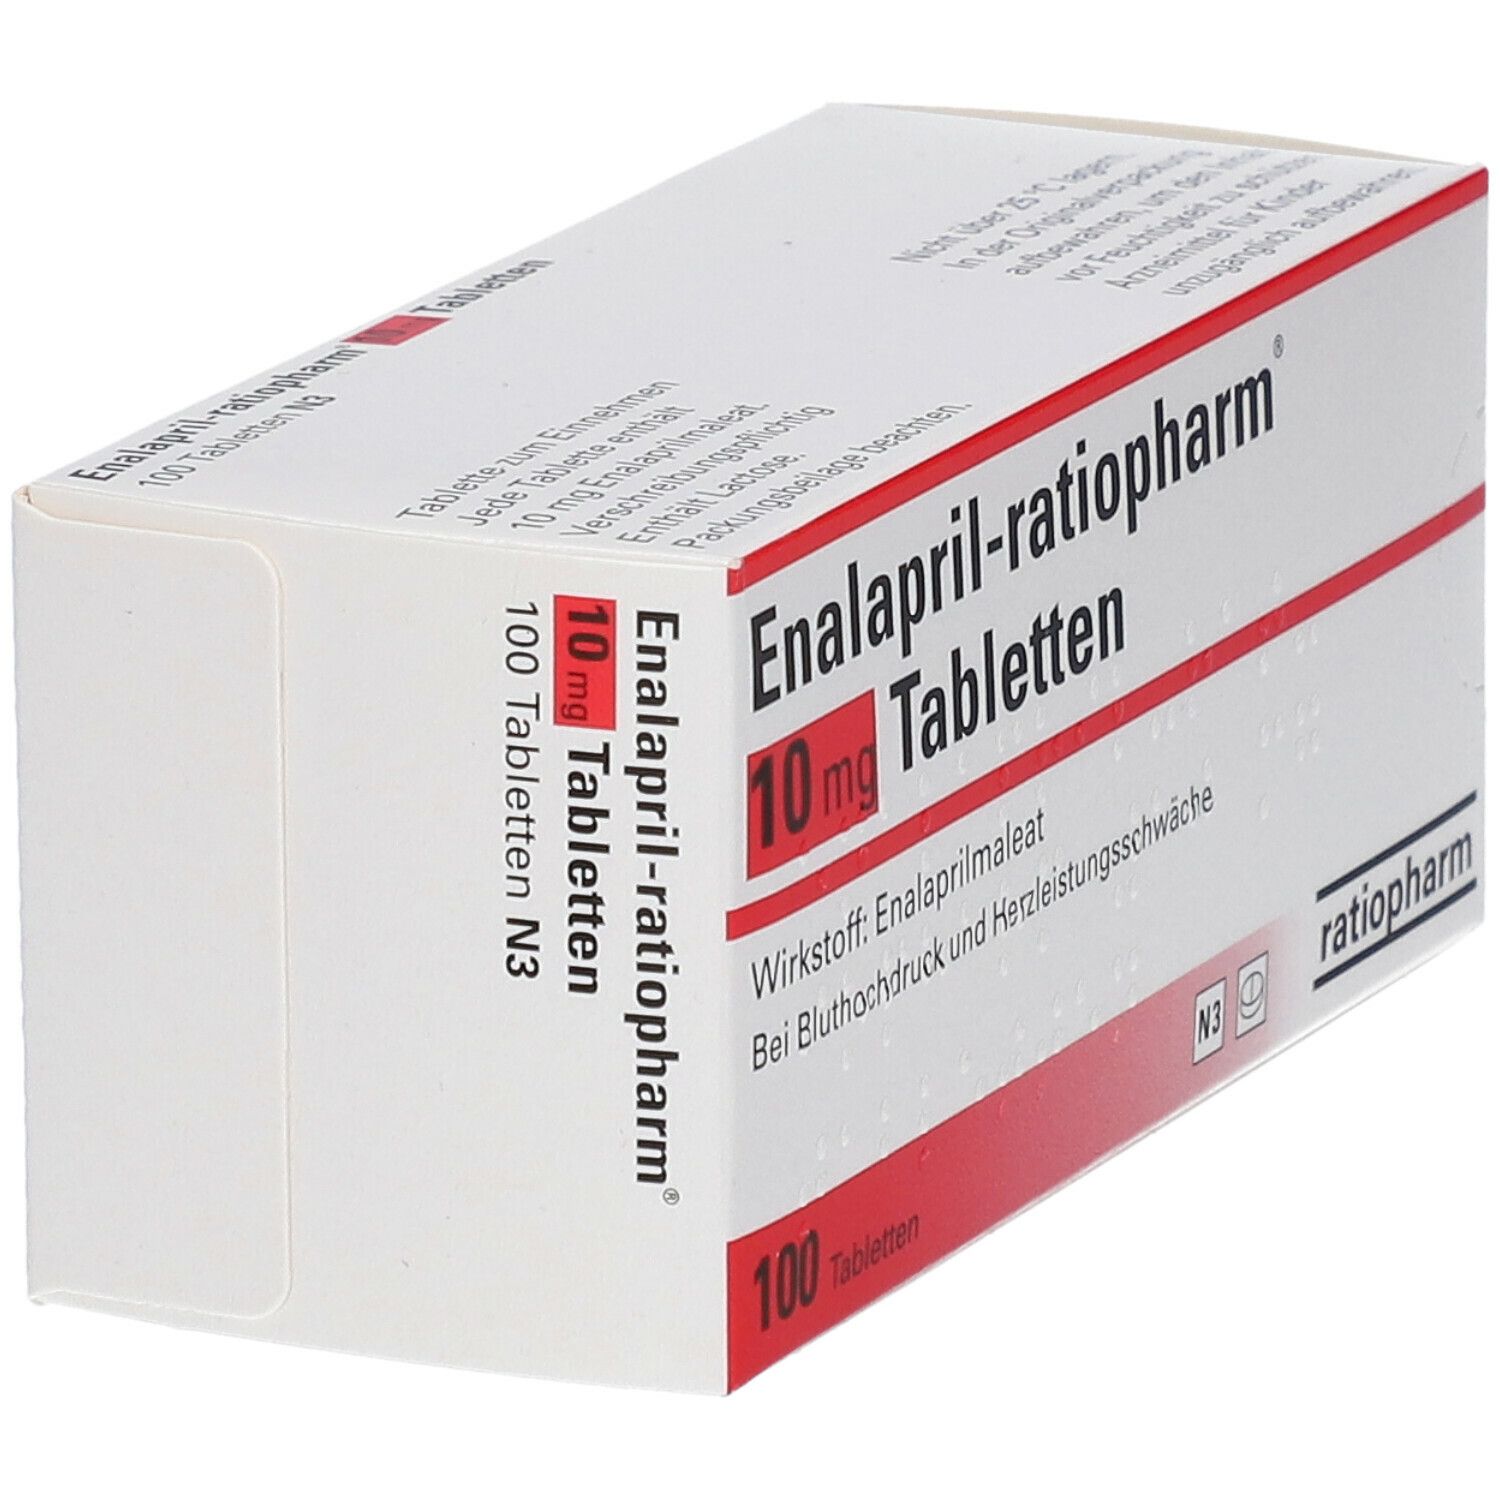 Enalapril-ratiopharm® 10 mg